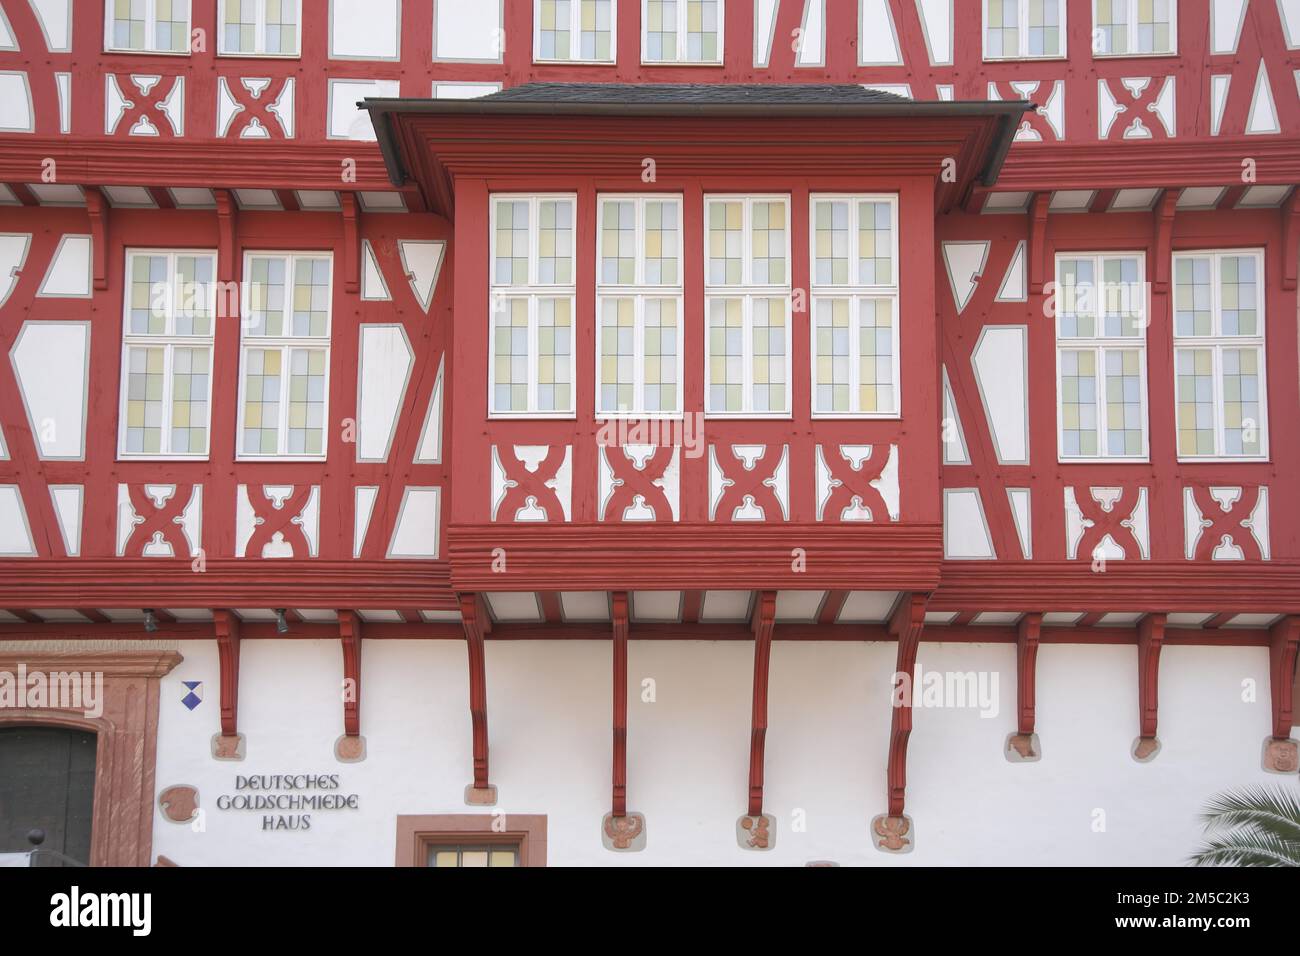 Bay window of the German Goldsmith's House with inscription, Altstaedter Markt, Hanau, Hesse, Germany Stock Photo